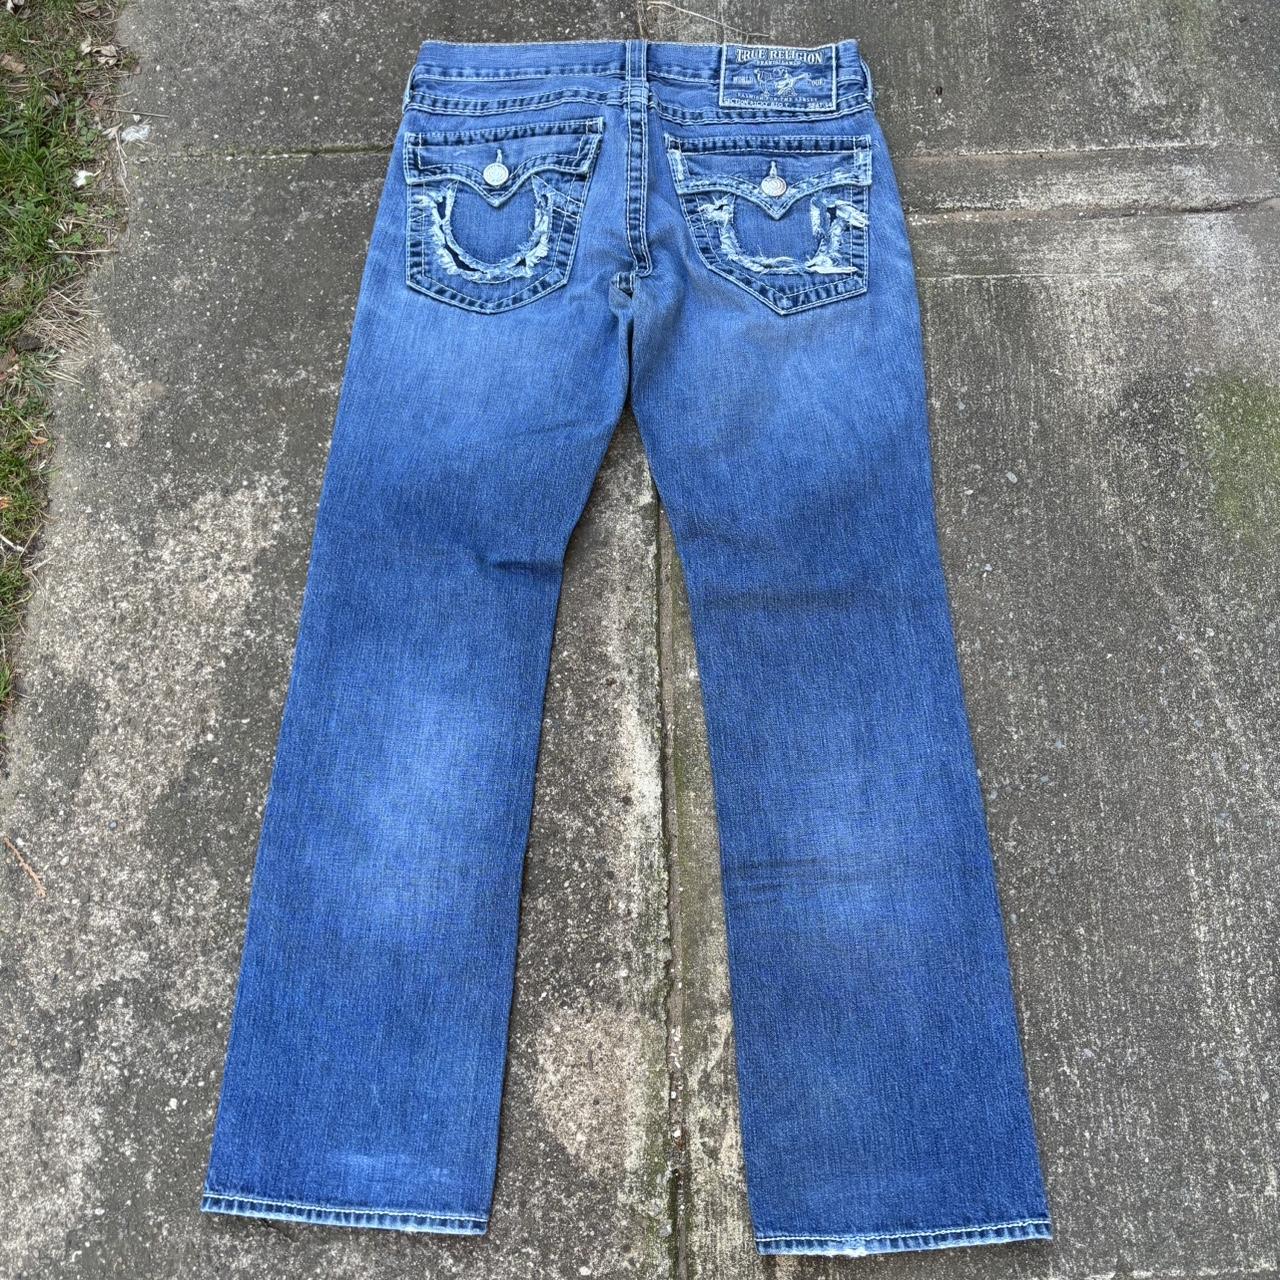 Crazy True Religion Ripped Jeans Condition -... - Depop